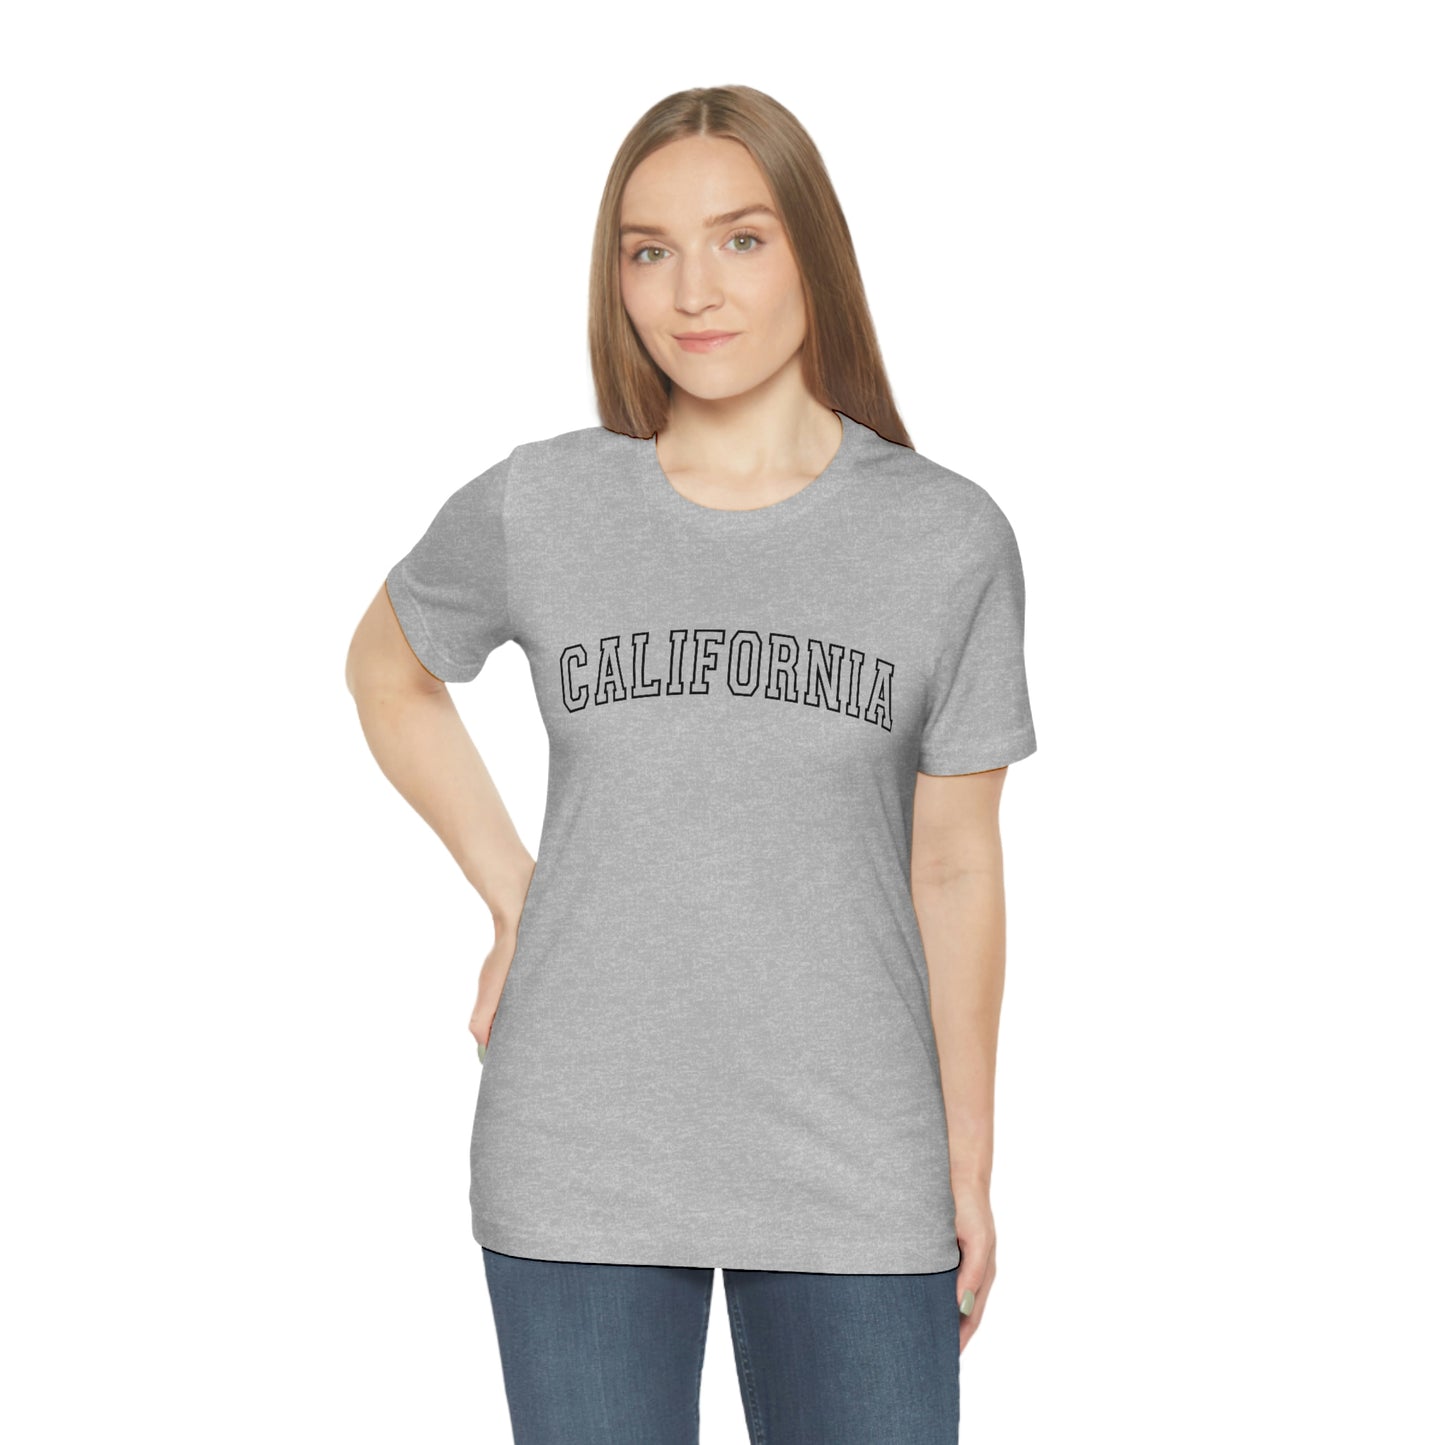 California Arch Varsity Letters Unisex Jersey Short Sleeve Tee Tshirt T-shirt